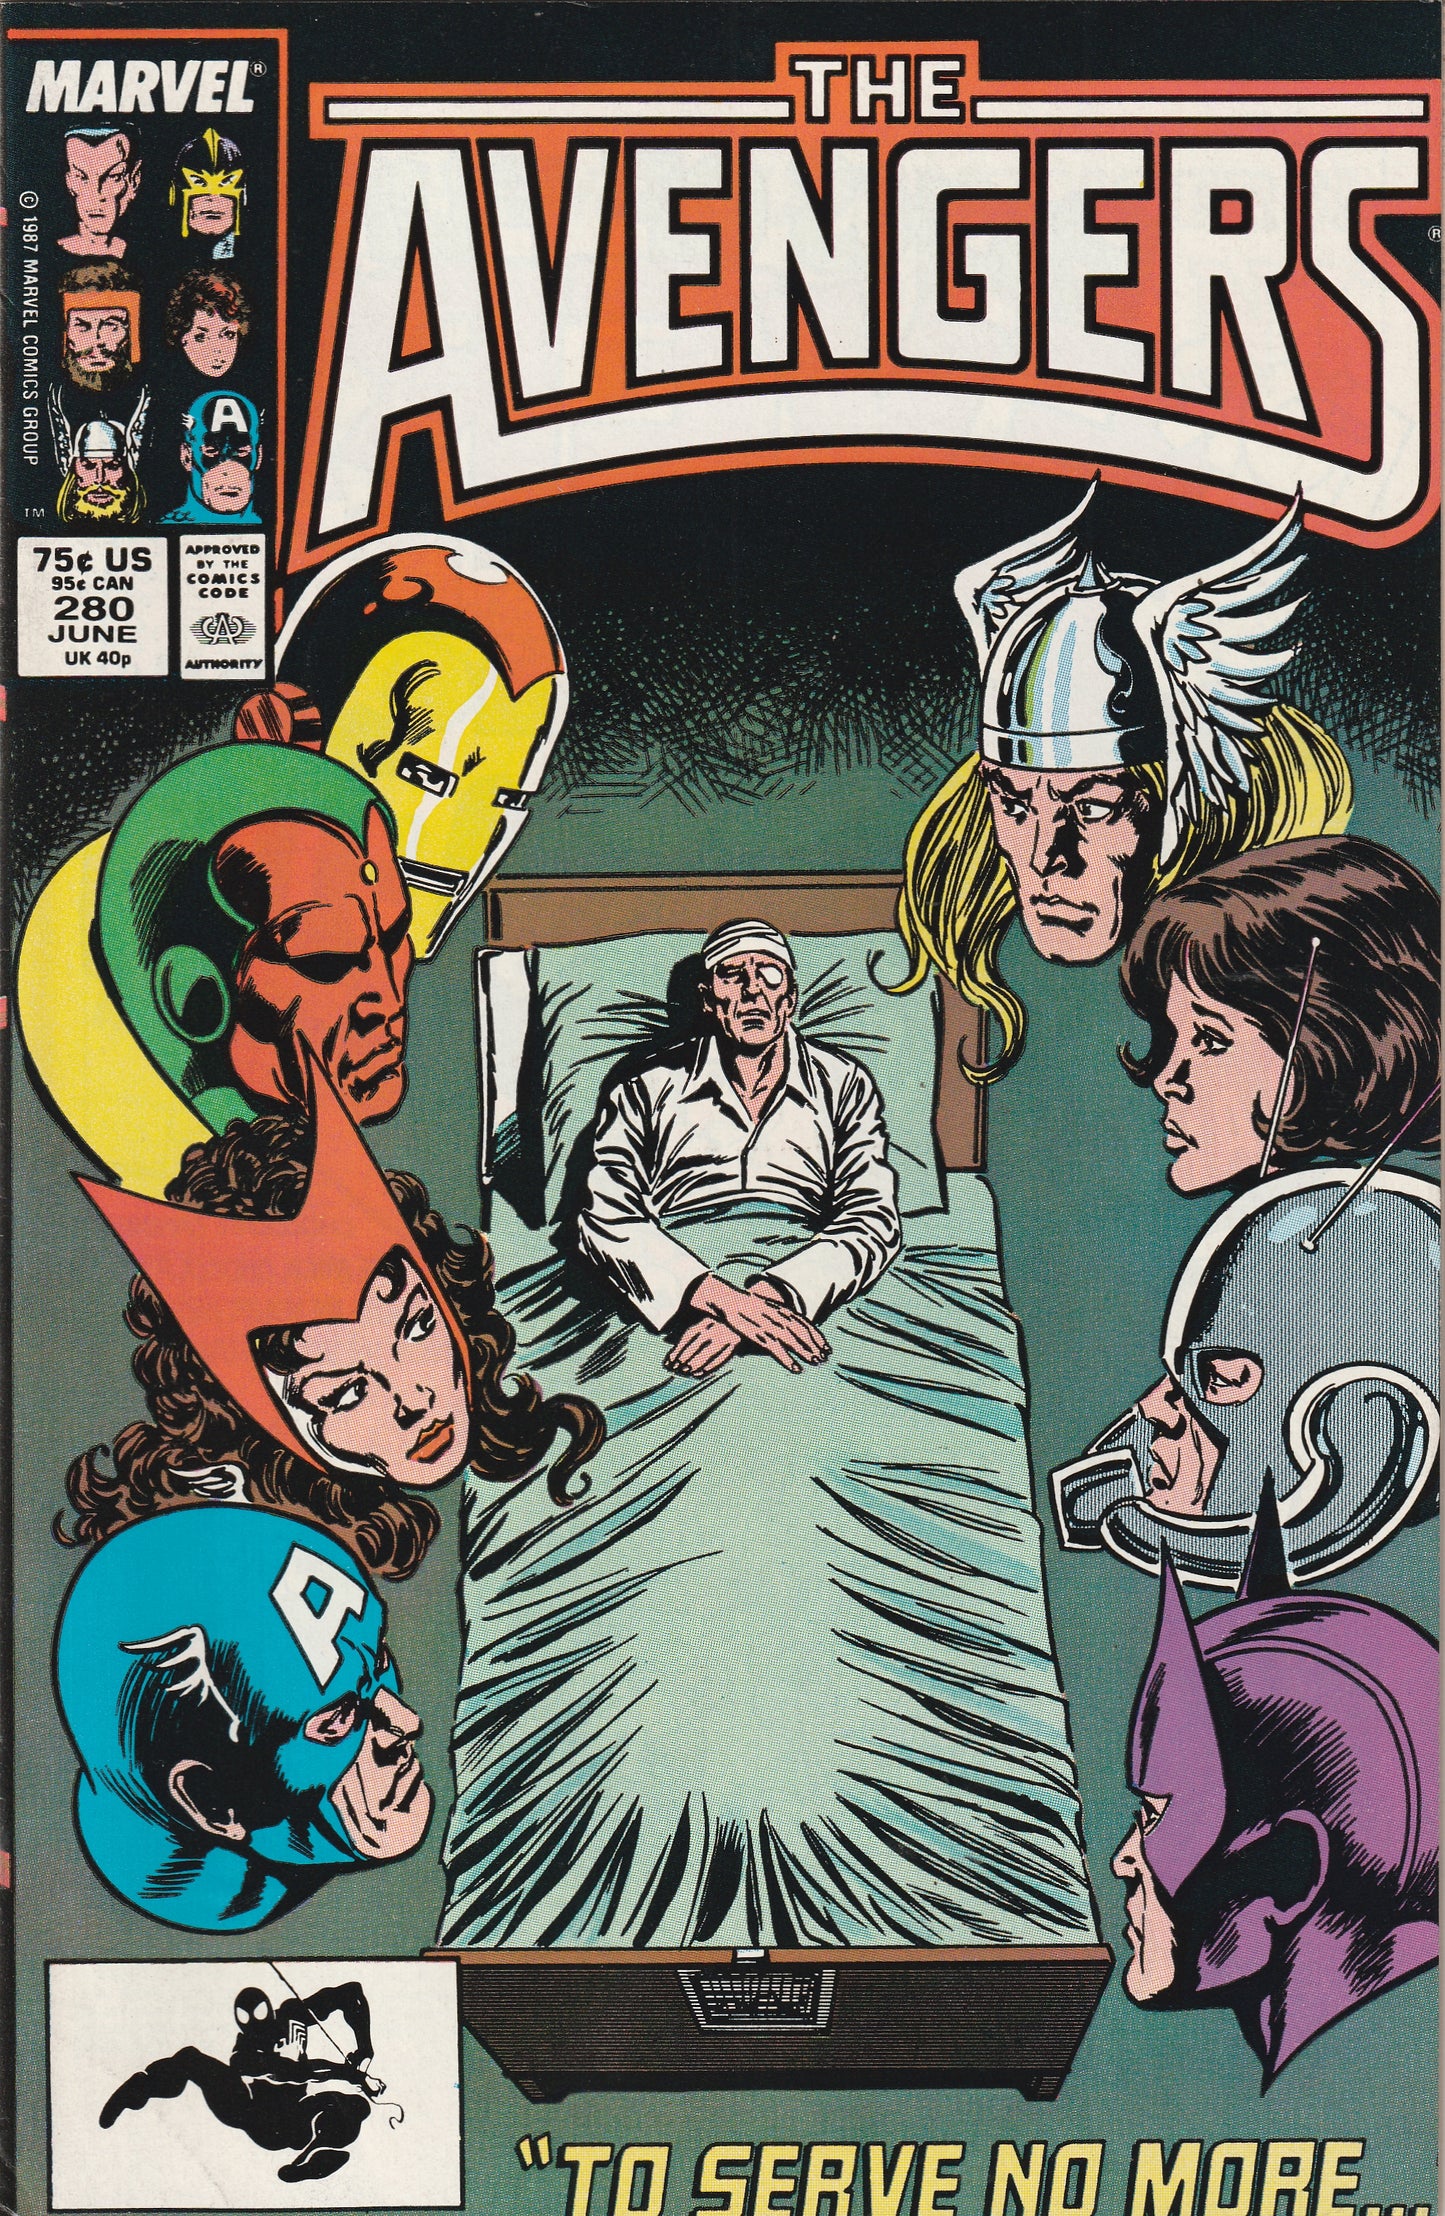 Avengers #280 (1987) - Edwin Jarvis Appearance